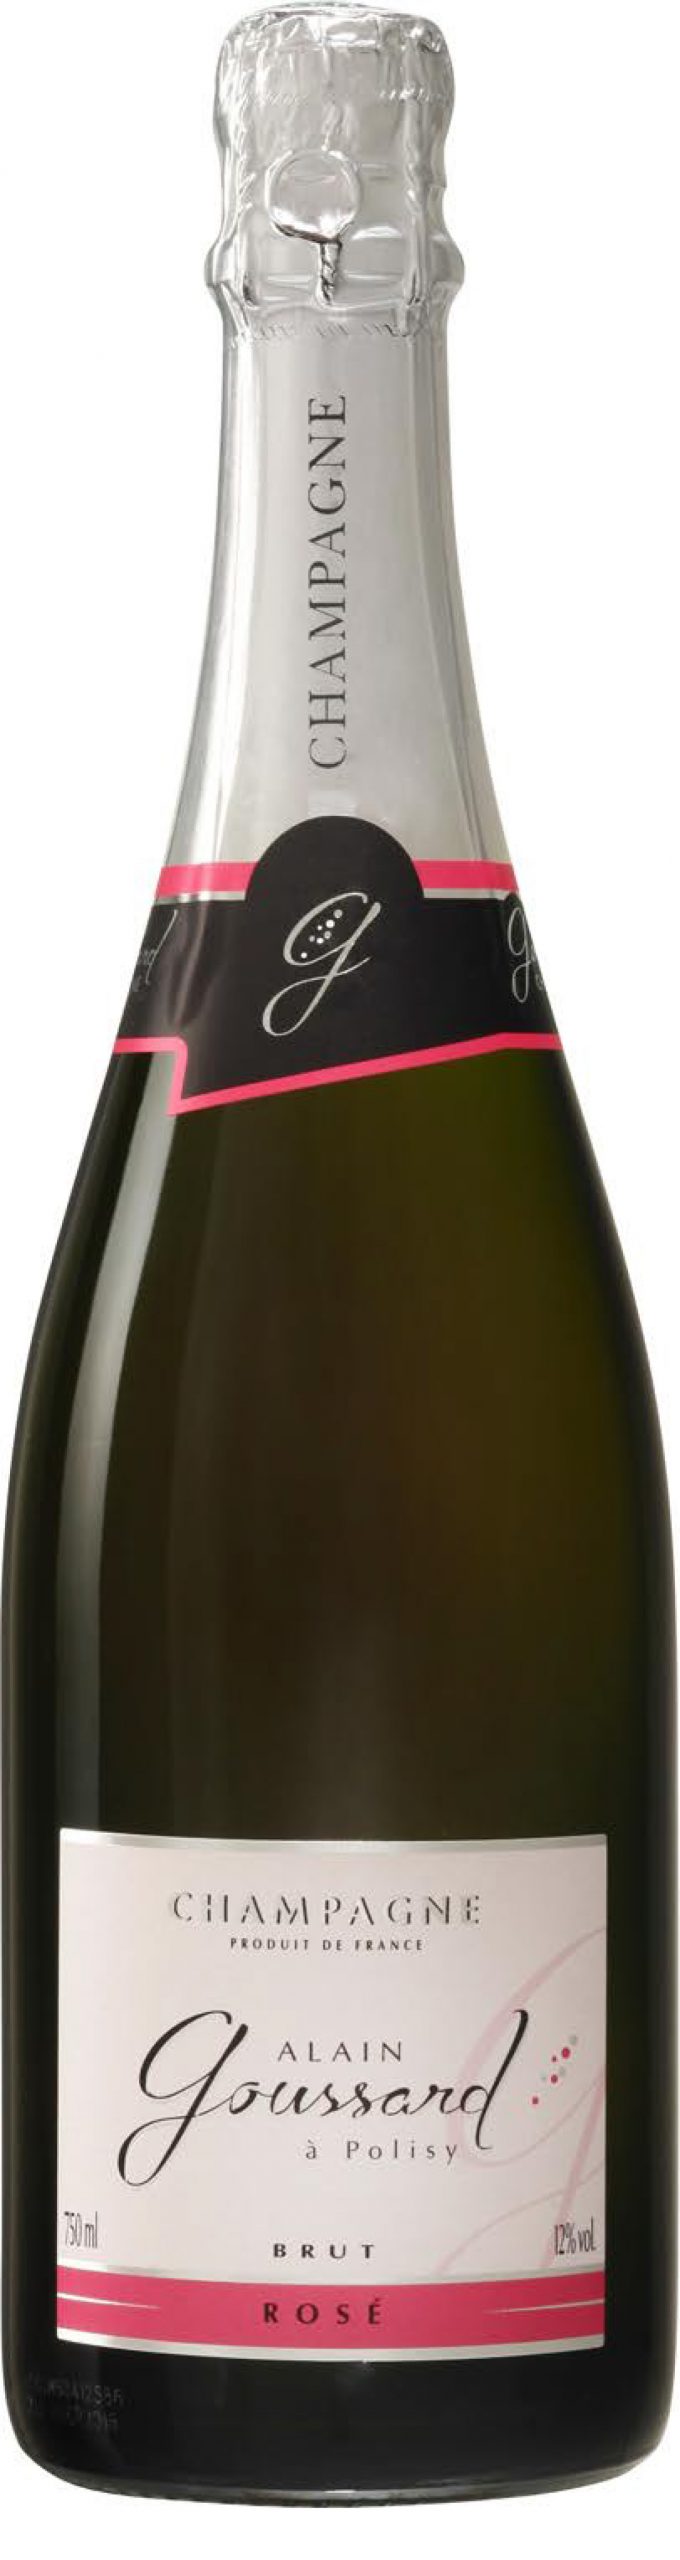 brut rosé champagne goussard